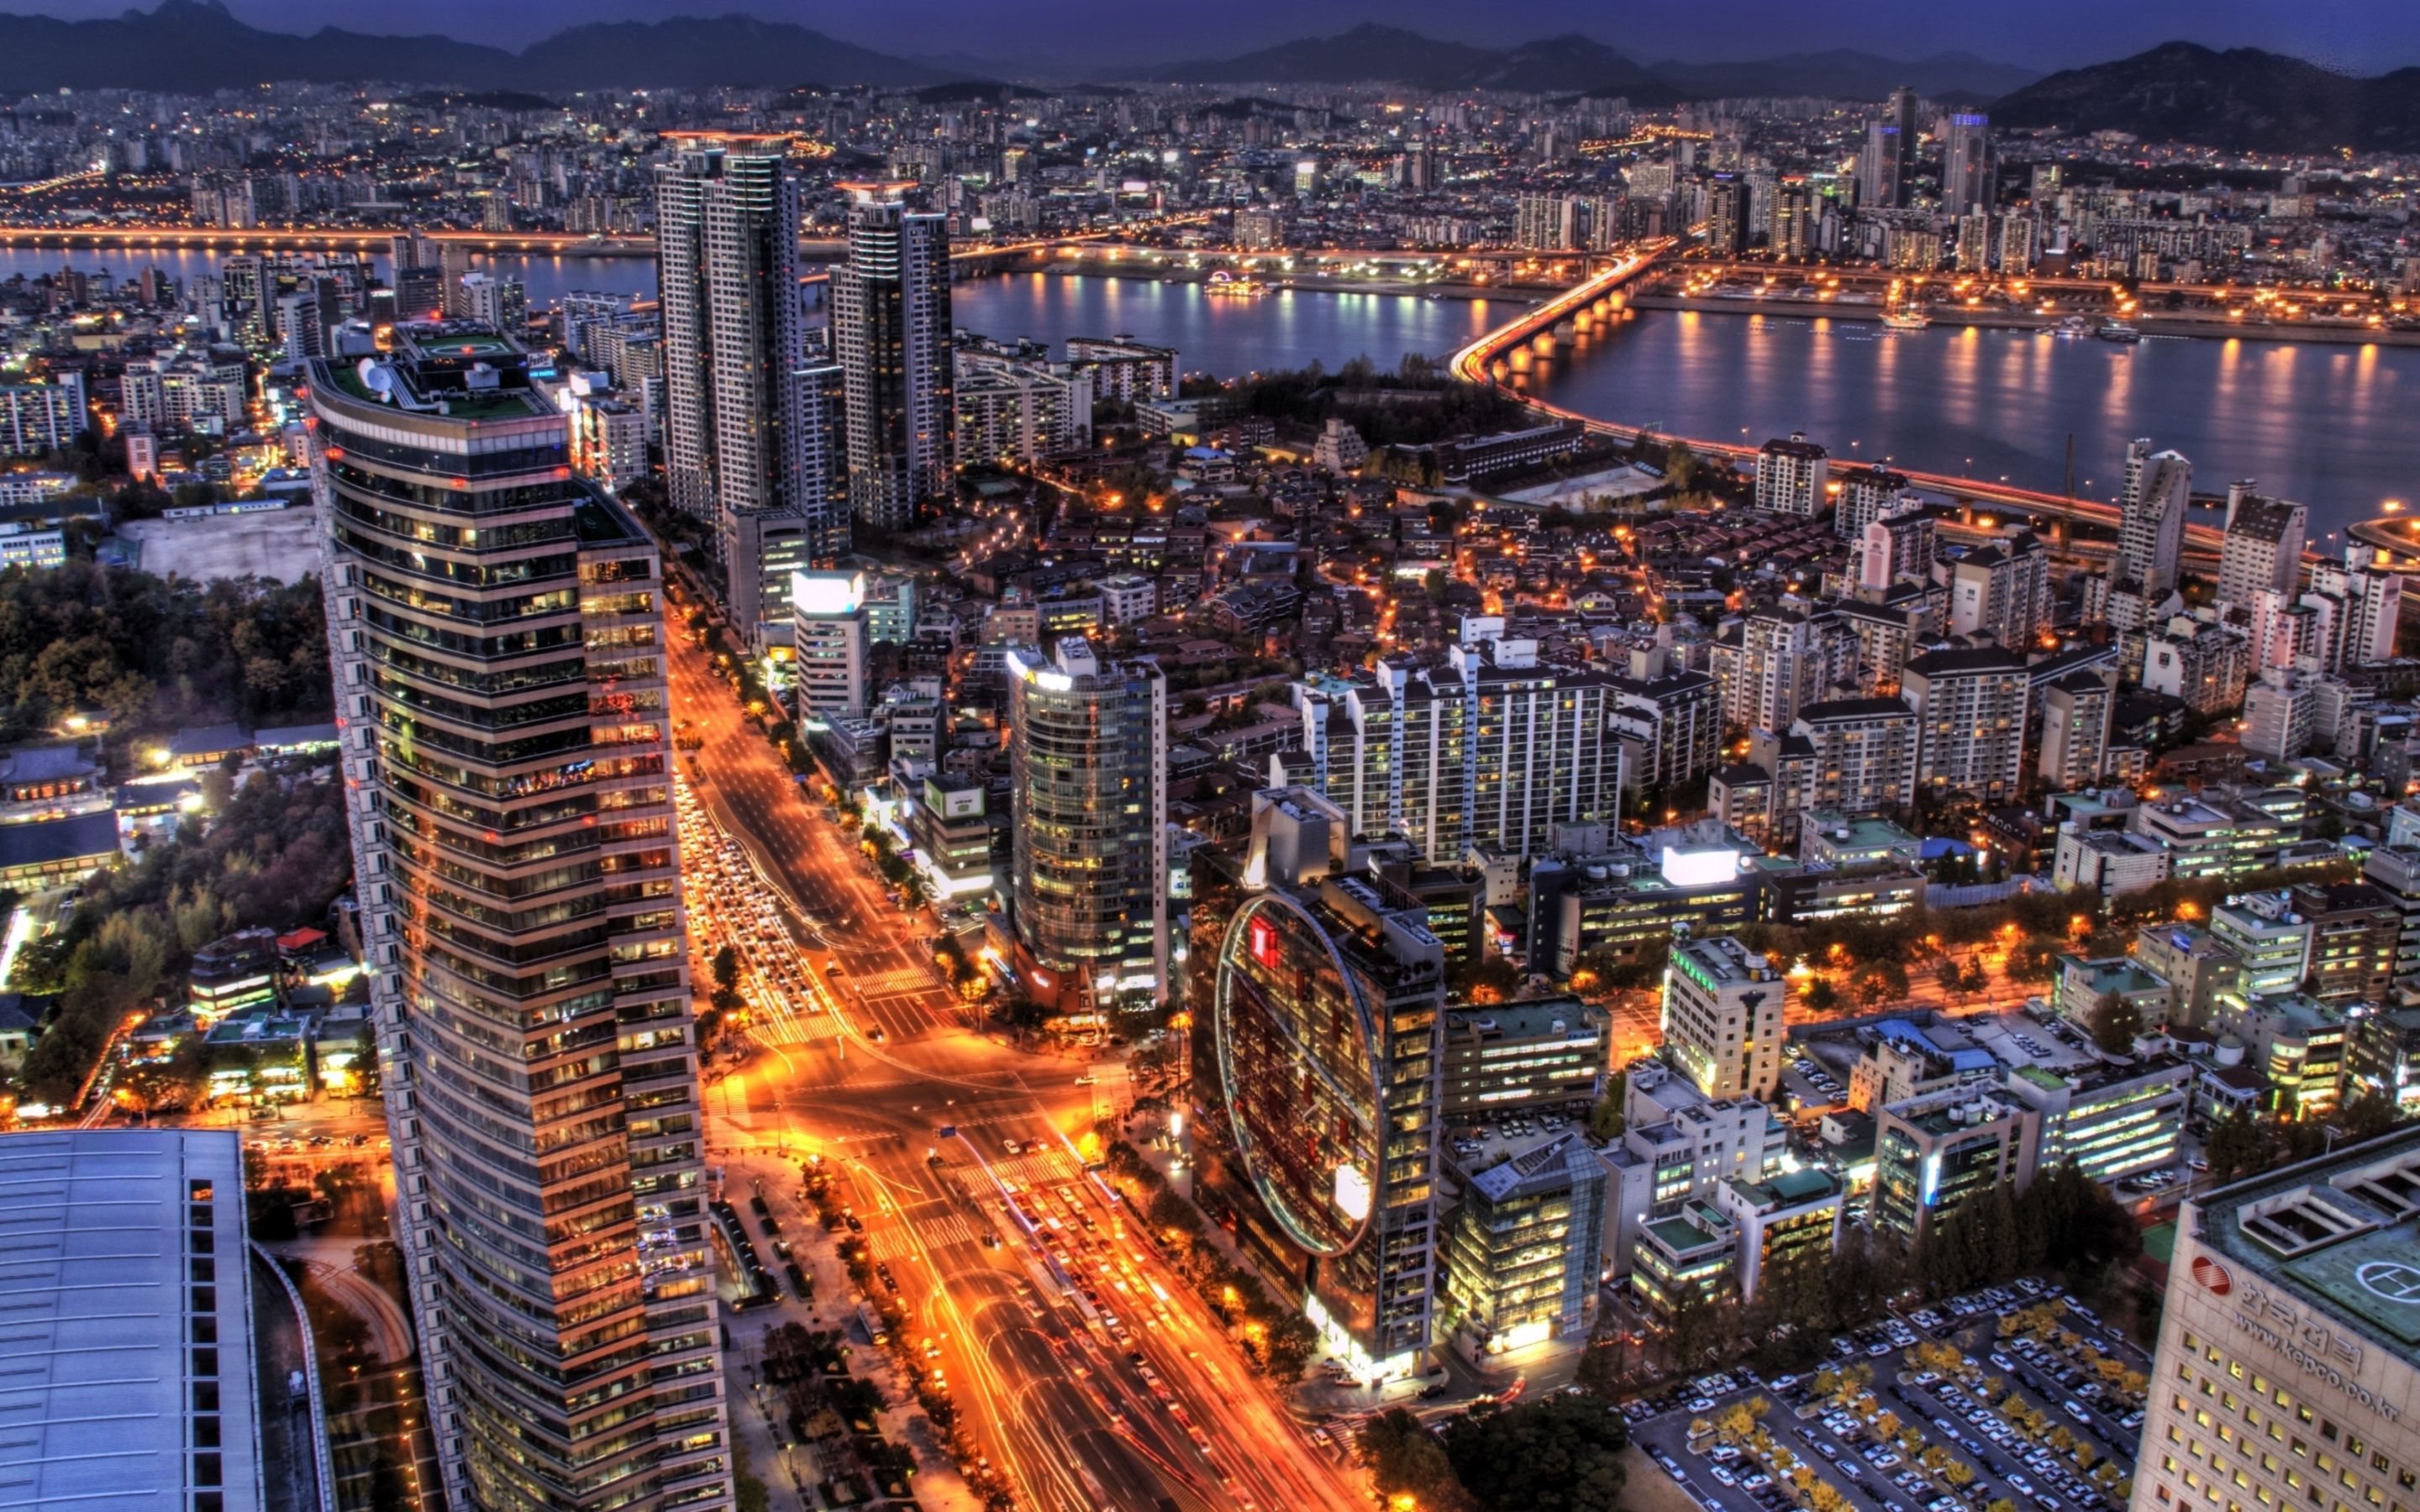 Seoul At Night South Korea Mac Wallpaper Download | Free Mac ...